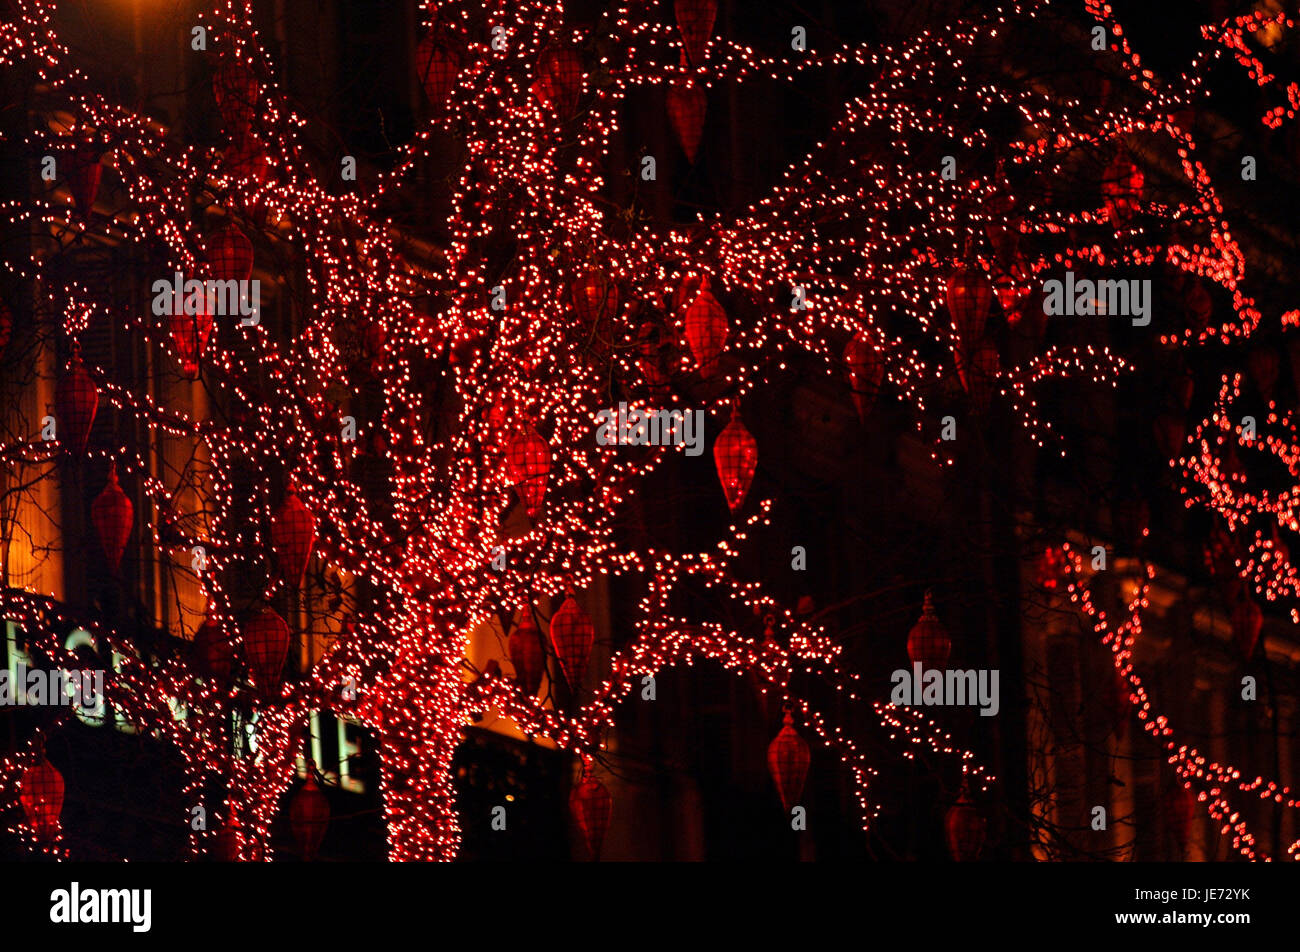 Christmas lighting, gallery Lafayette, boulevard of househusband, Paris, France, Stock Photo